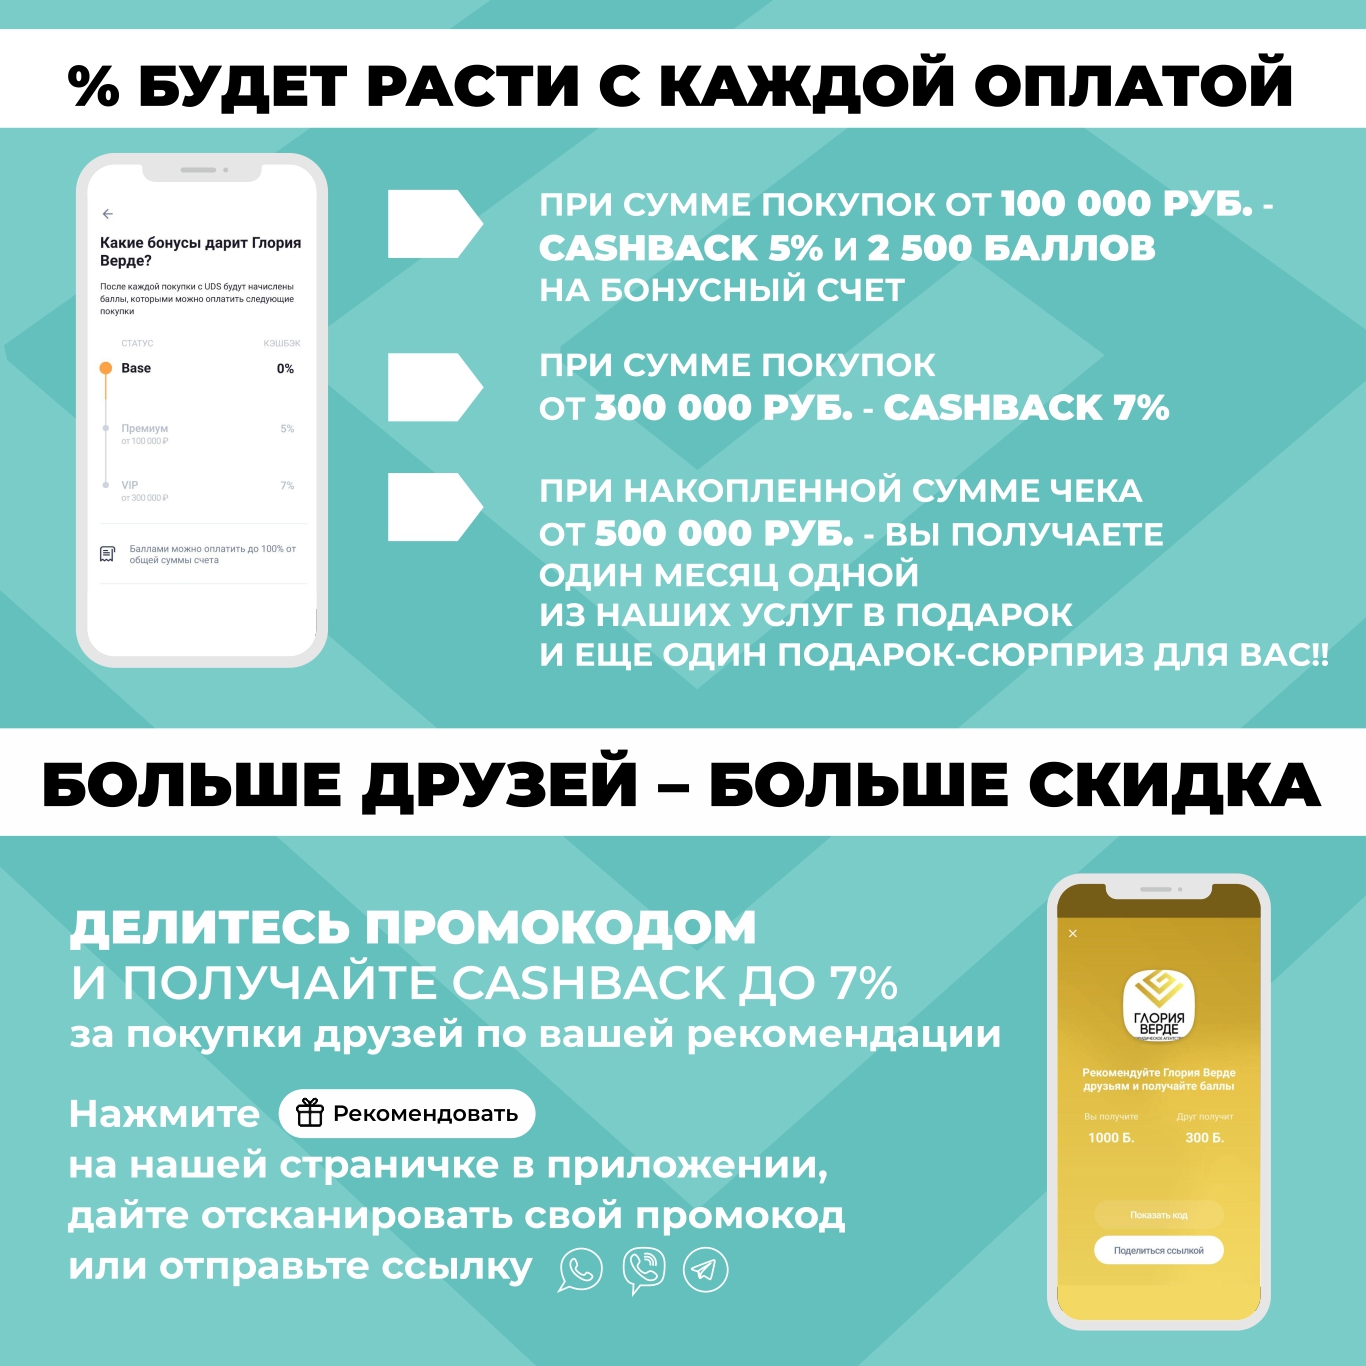 bonusnaya_programma2